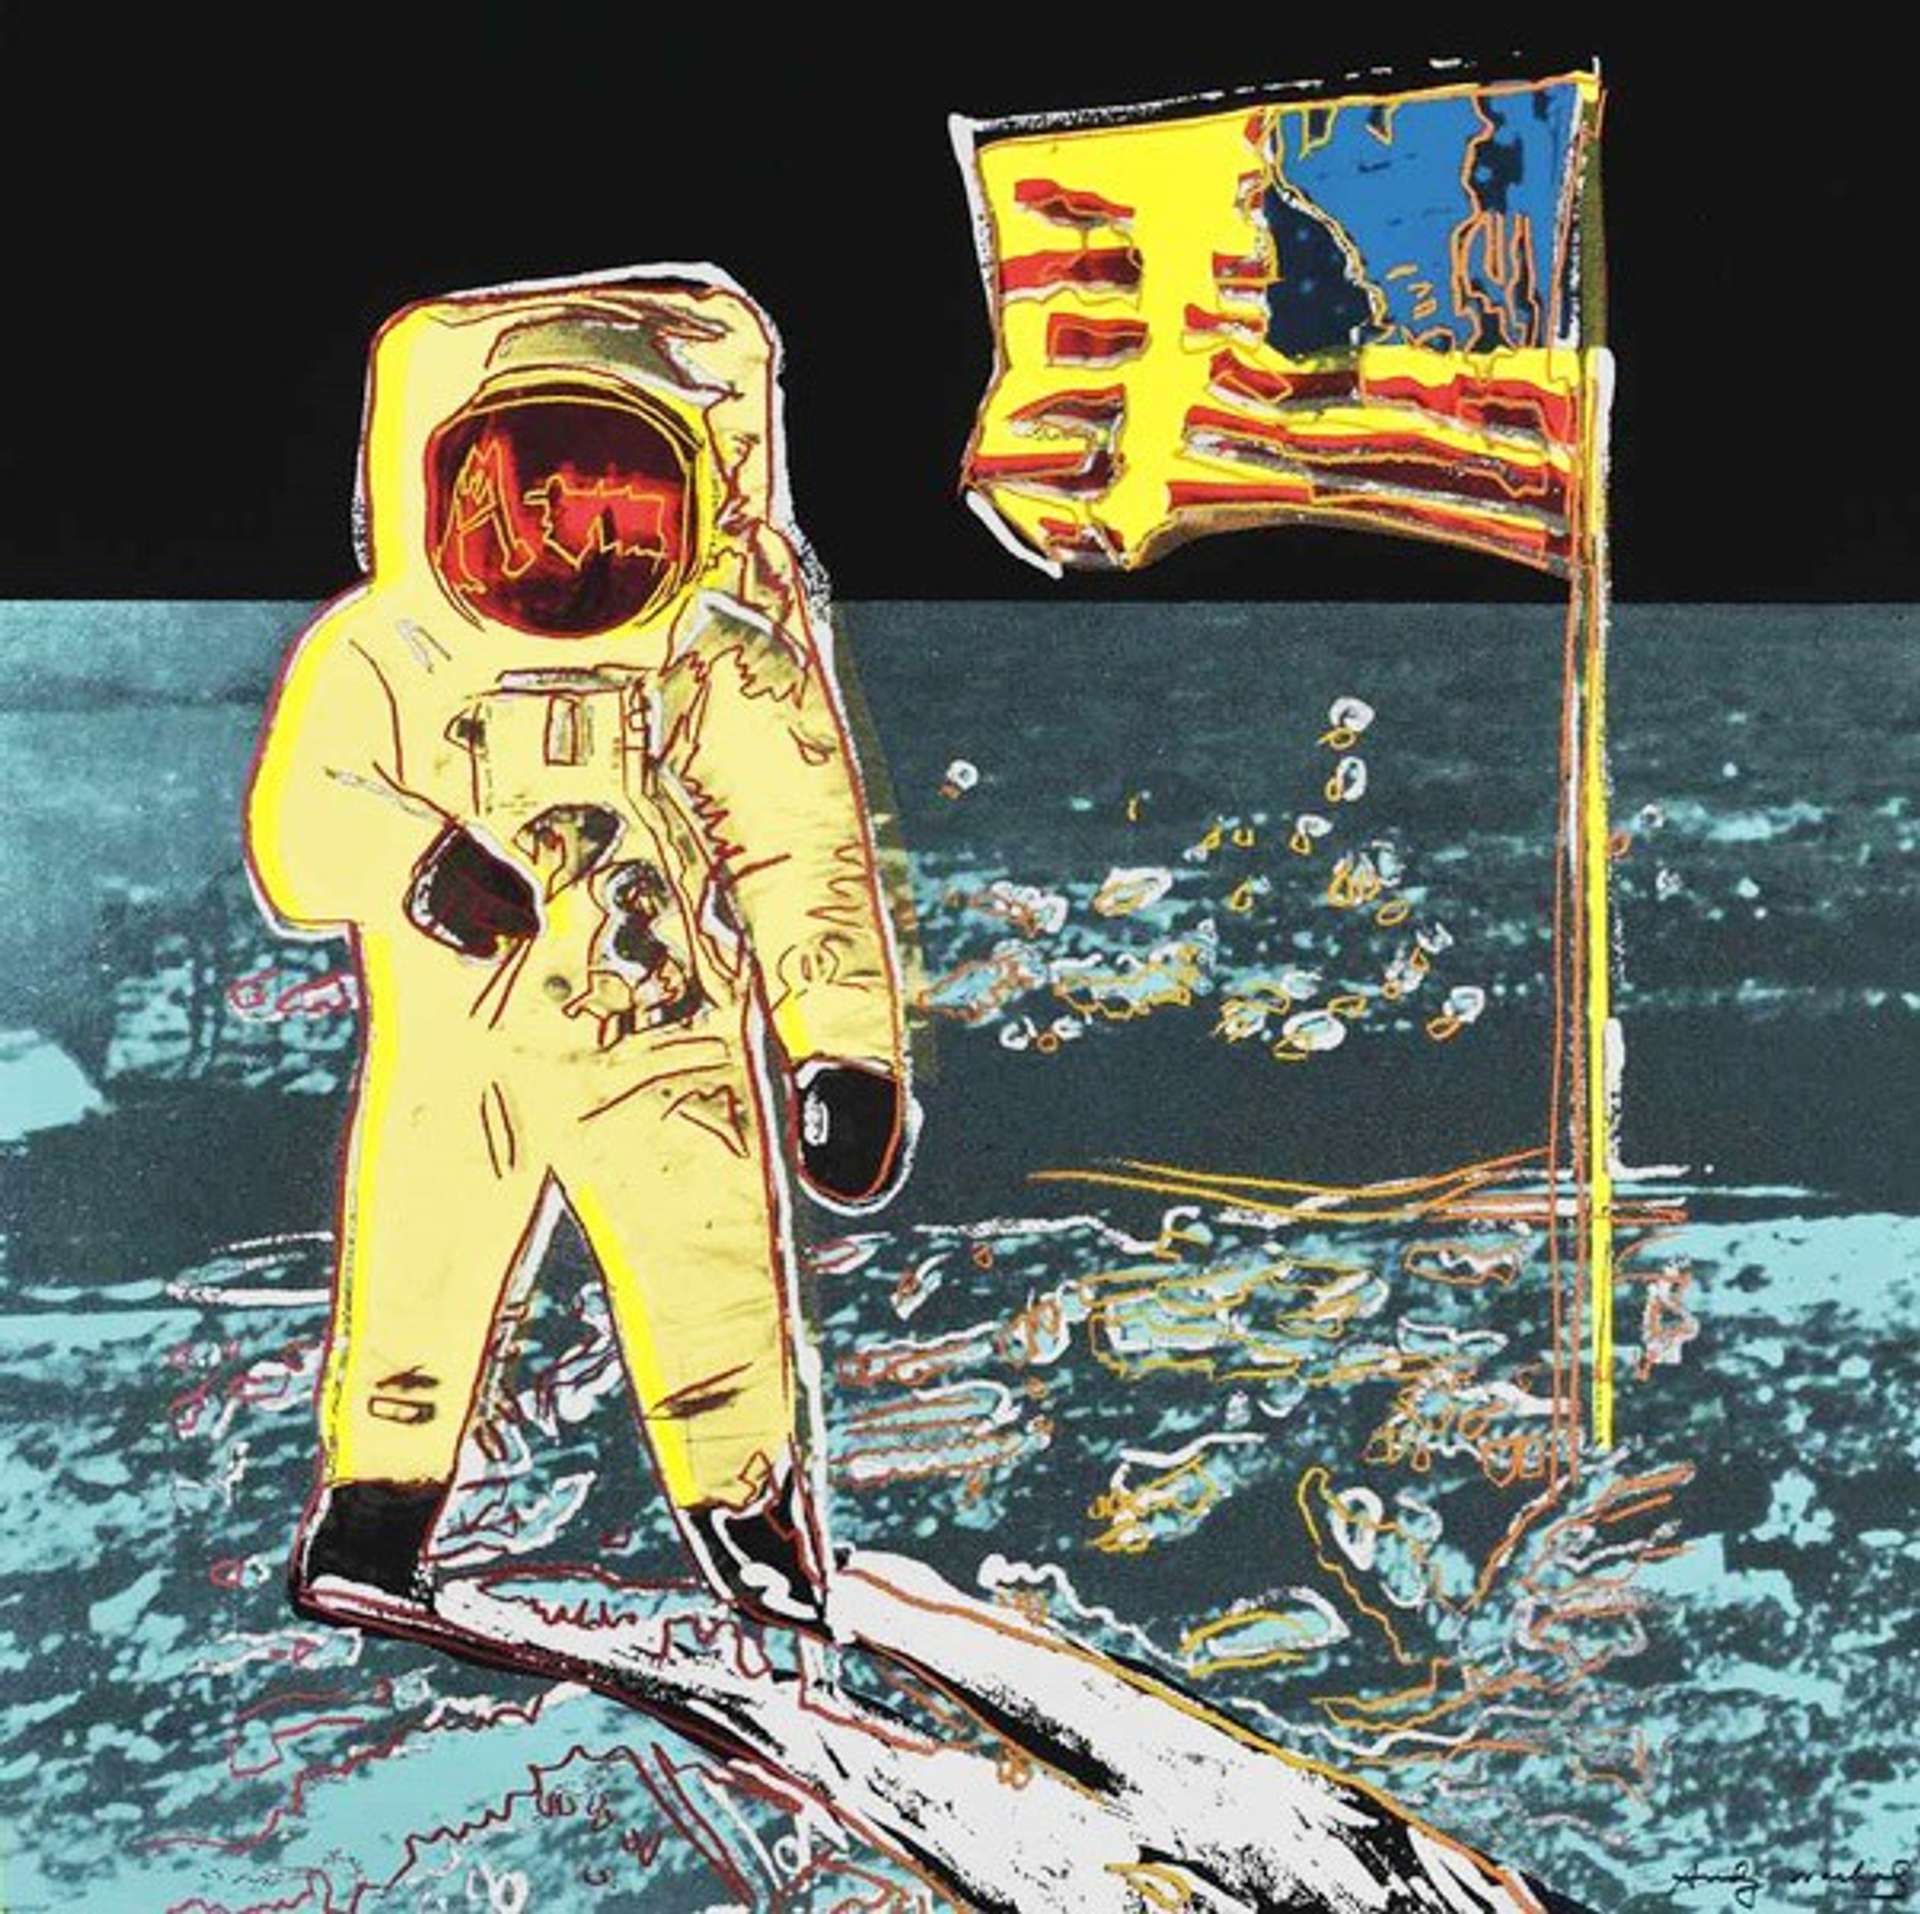 Moonwalk (F. & S. II.404) by Andy Warhol